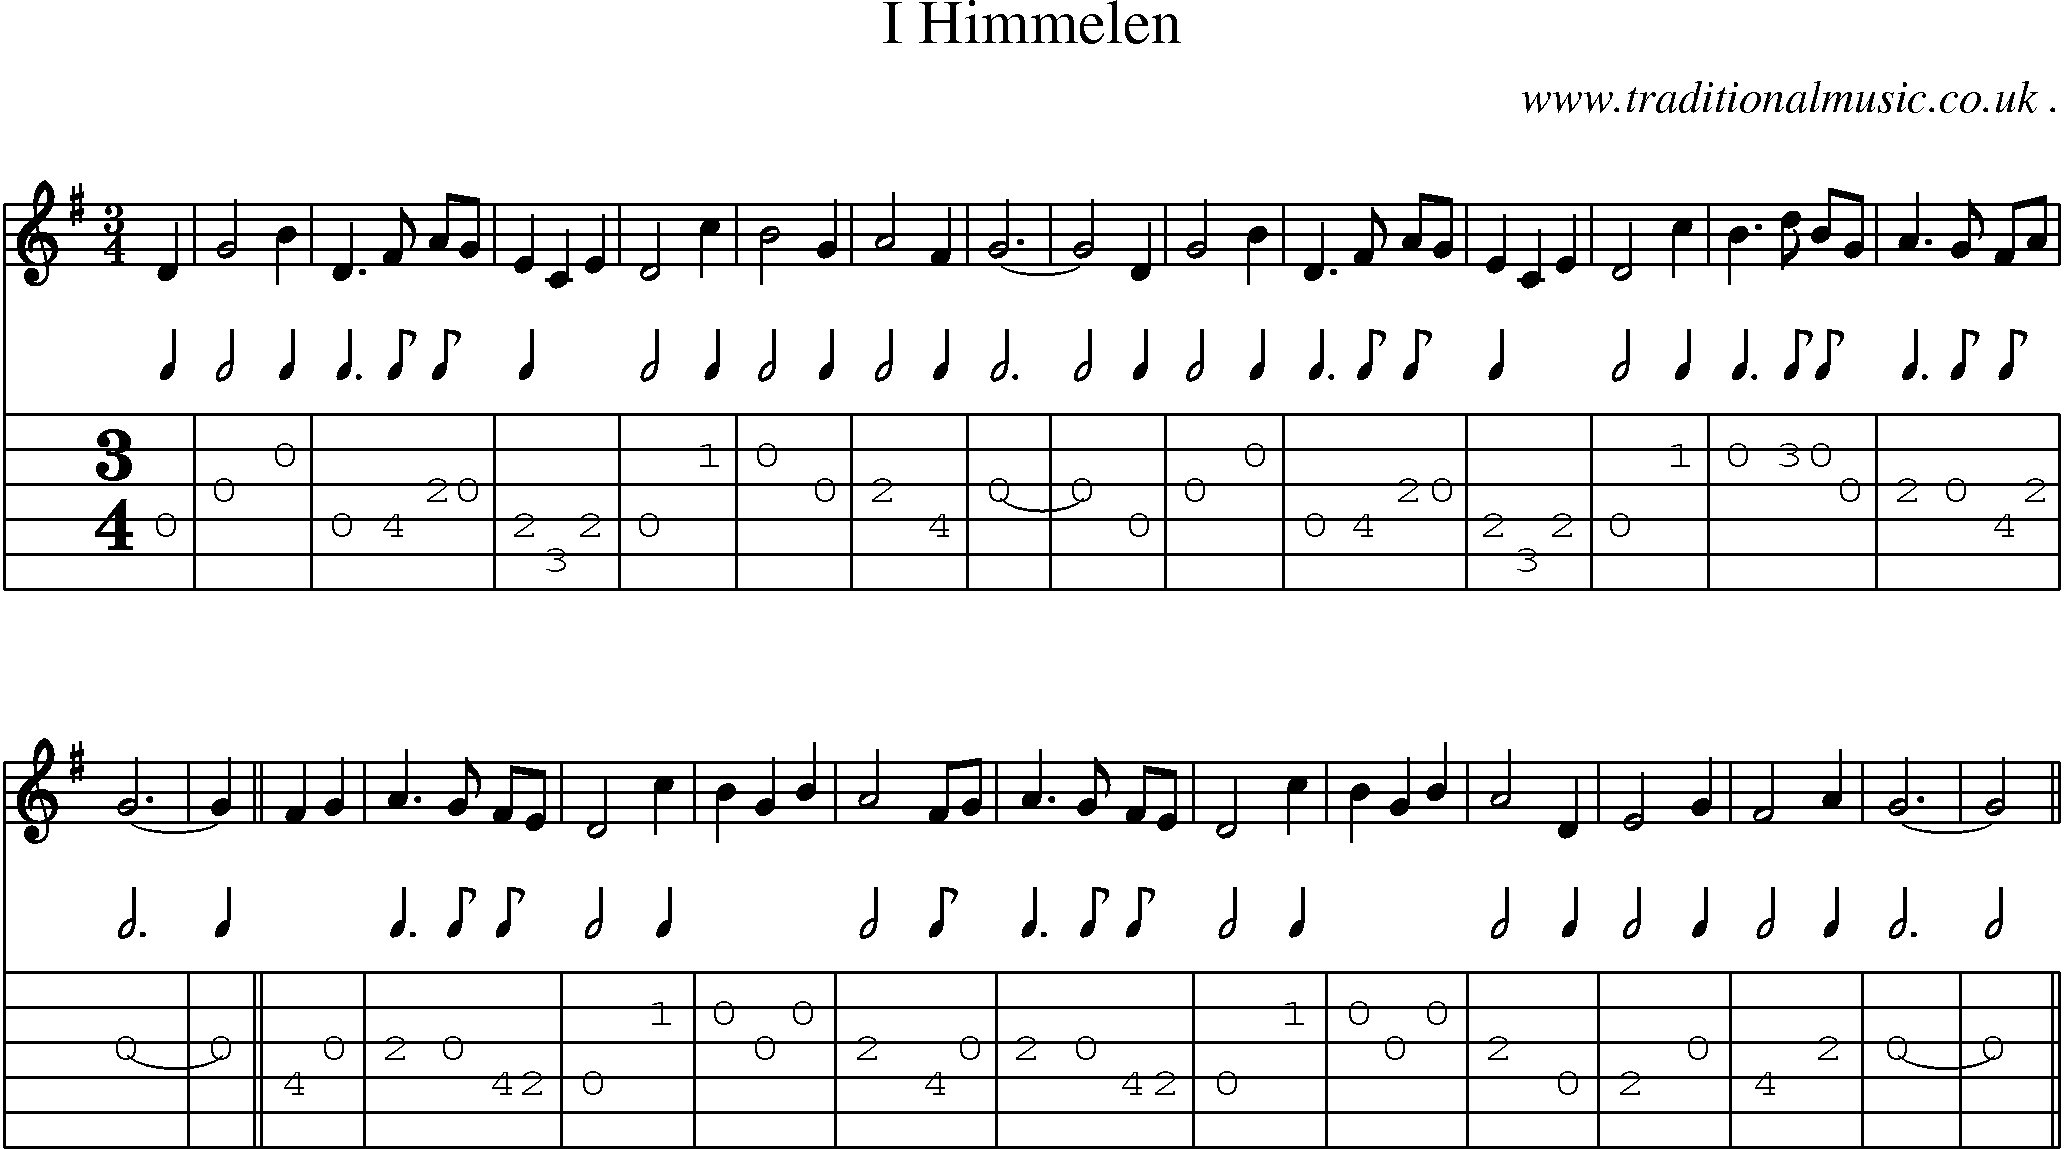 Sheet-Music and Guitar Tabs for I Himmelen